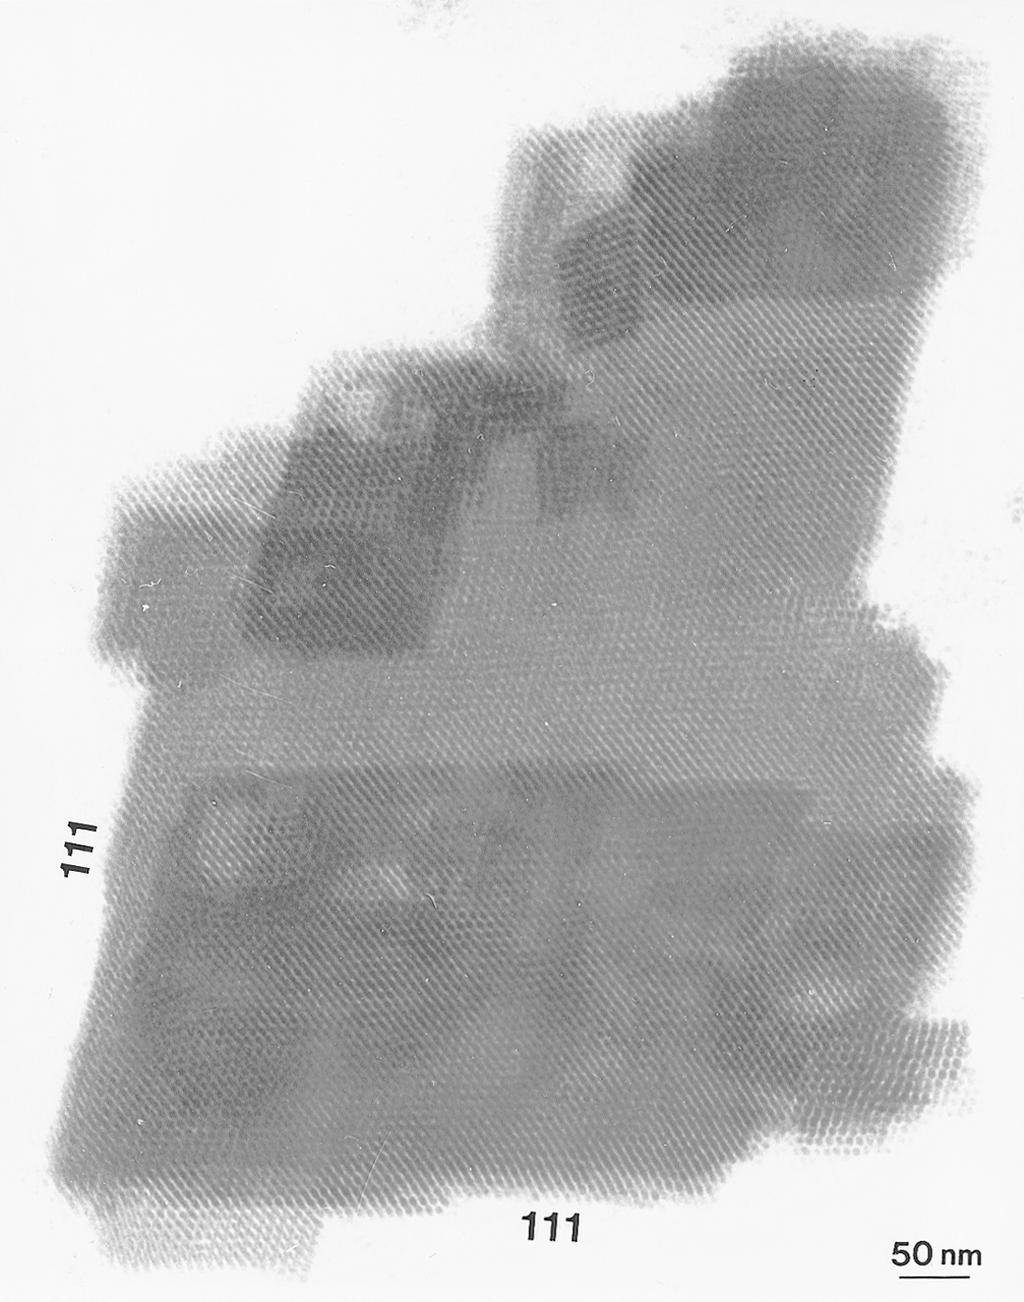 Superlattices of Nanocrystals 103 FIG. 2. TEM image of {111}s faceted nanocrystal superlattices assembled by Ag nanocrystals.